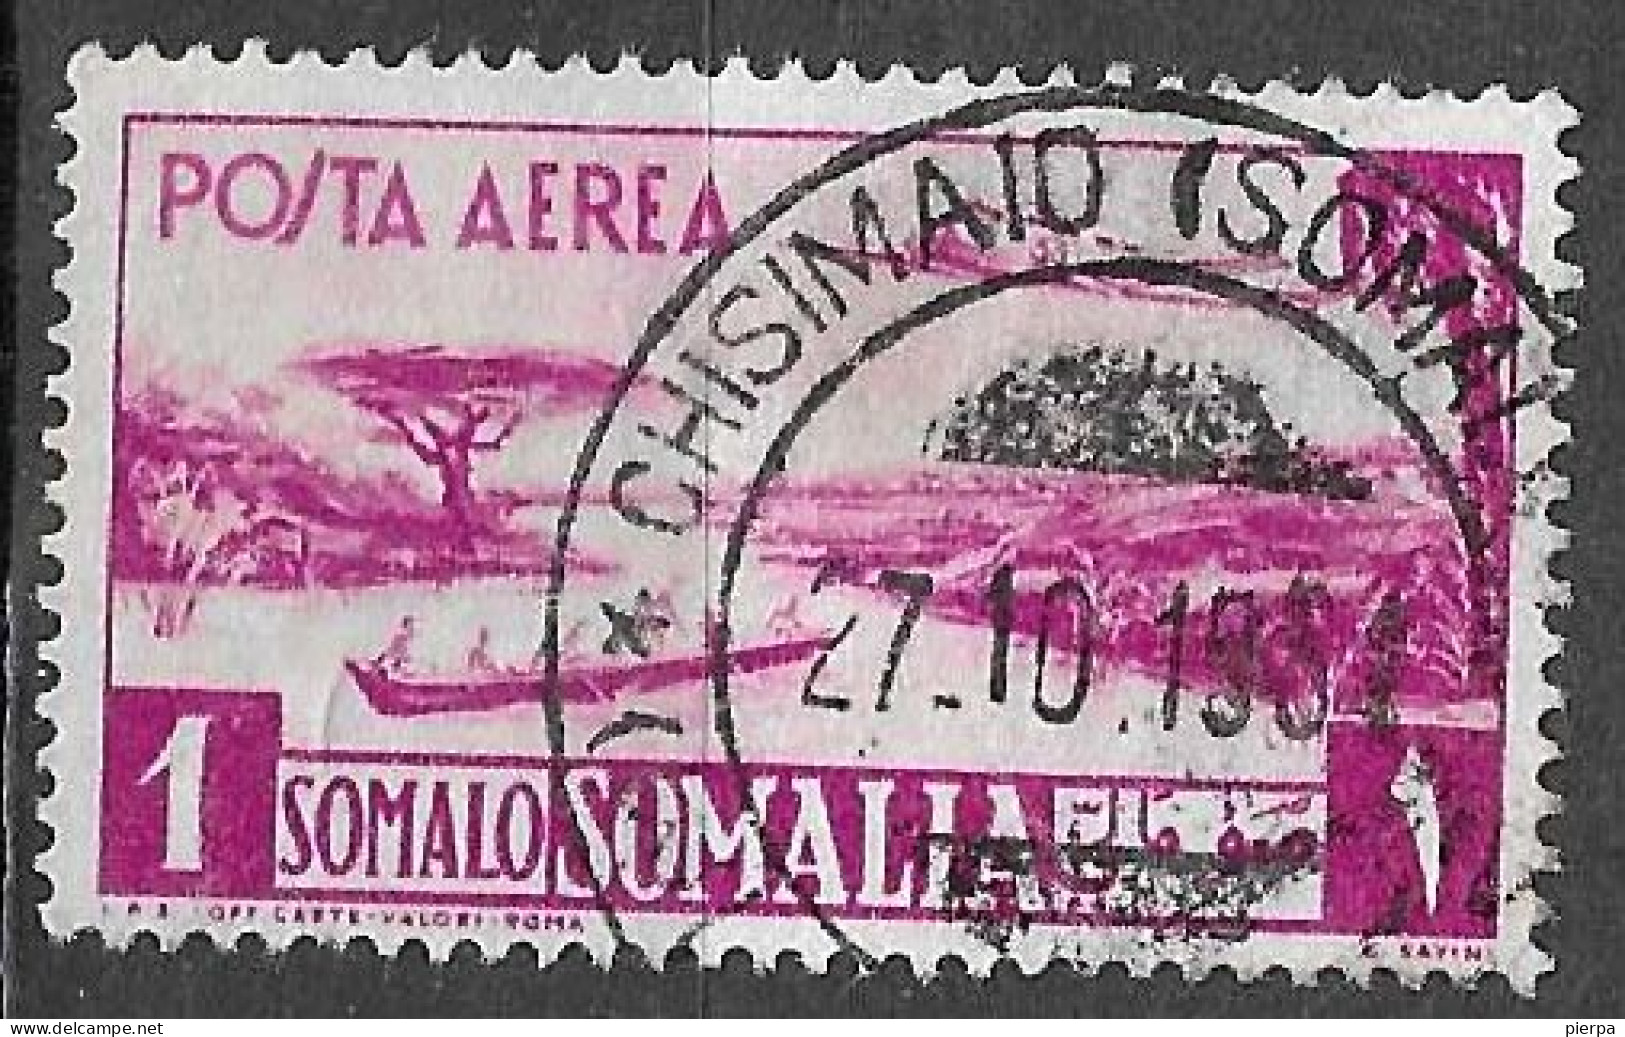 SOMALIA A.F.I.S. - 1950 - POSTA AEREA - 1 SOMALI - USATO (YVERT AV 35 - MICHEL 260 - SS A 6) - Somalie (AFIS)